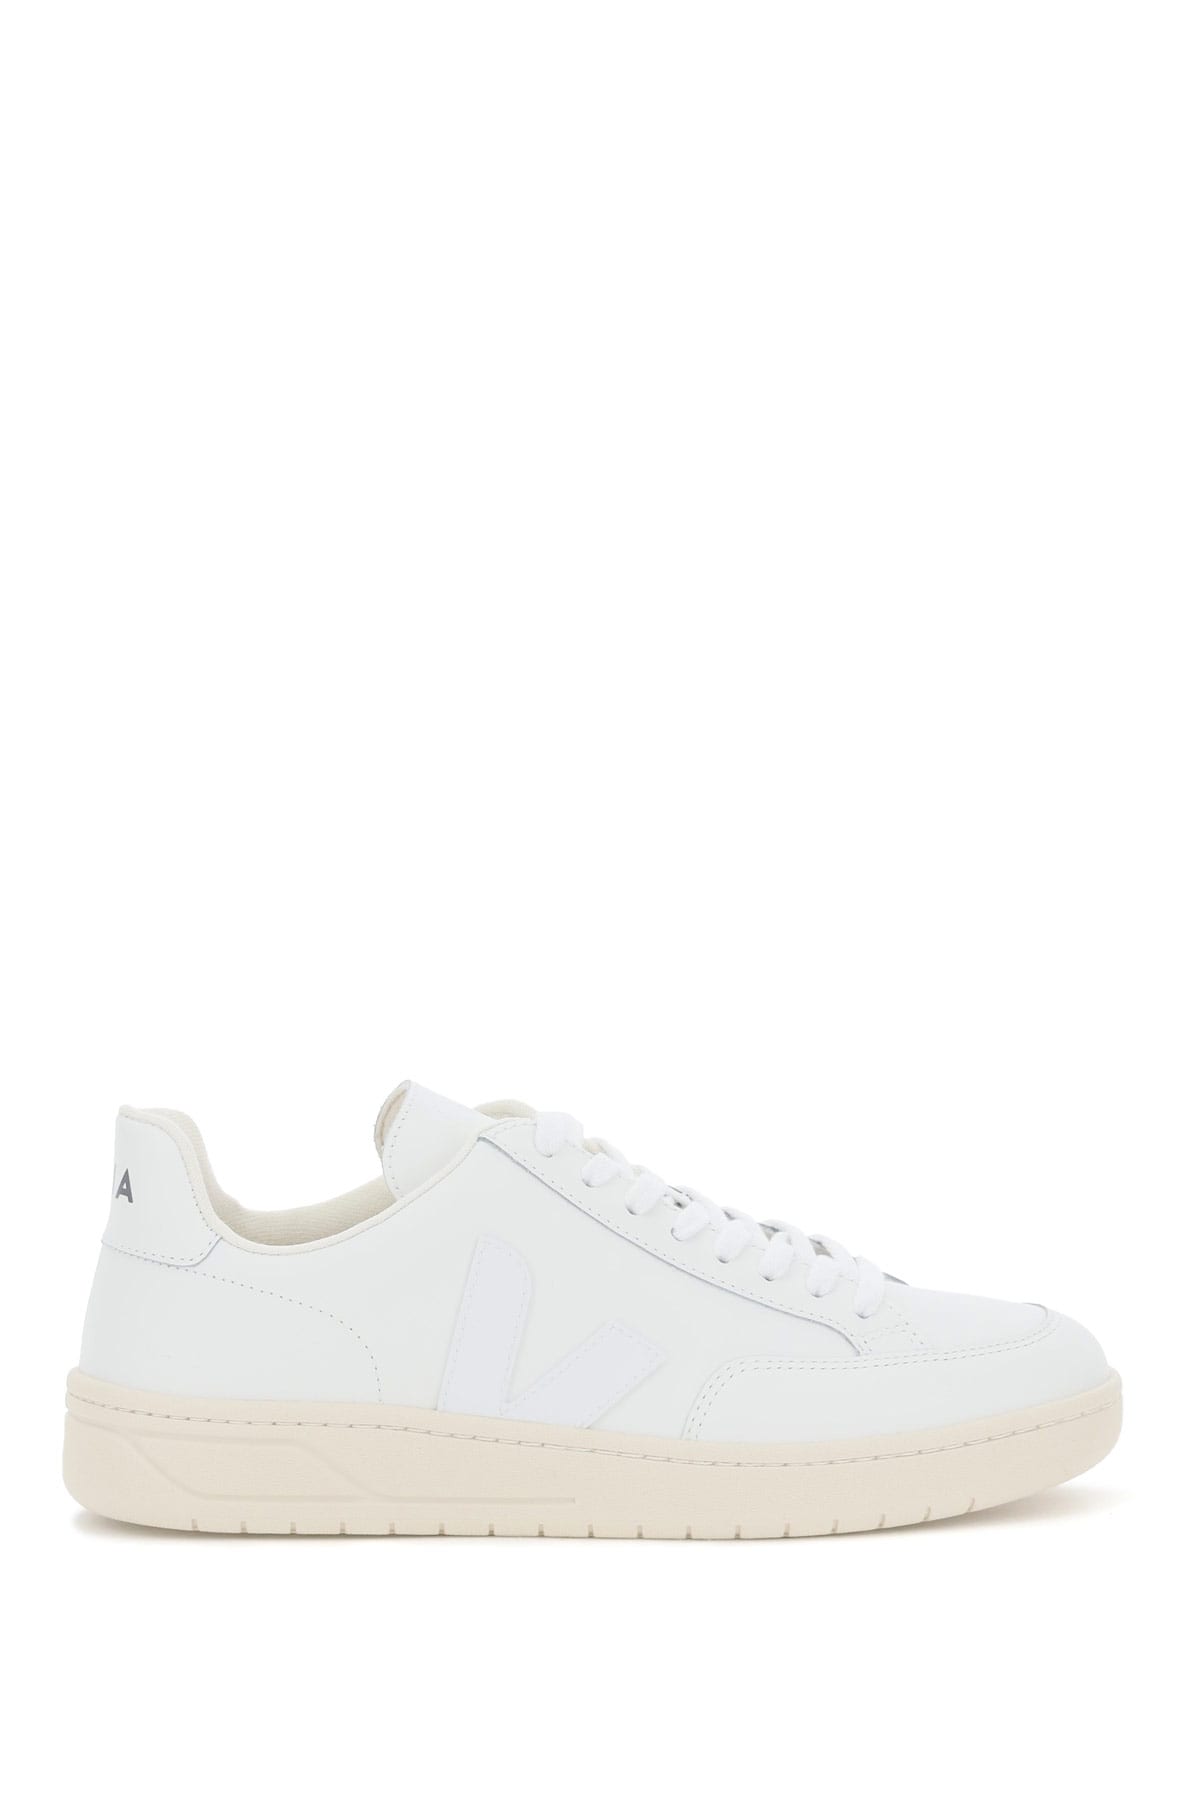 Veja V-12 Leather Sneakers In Extra White (white)